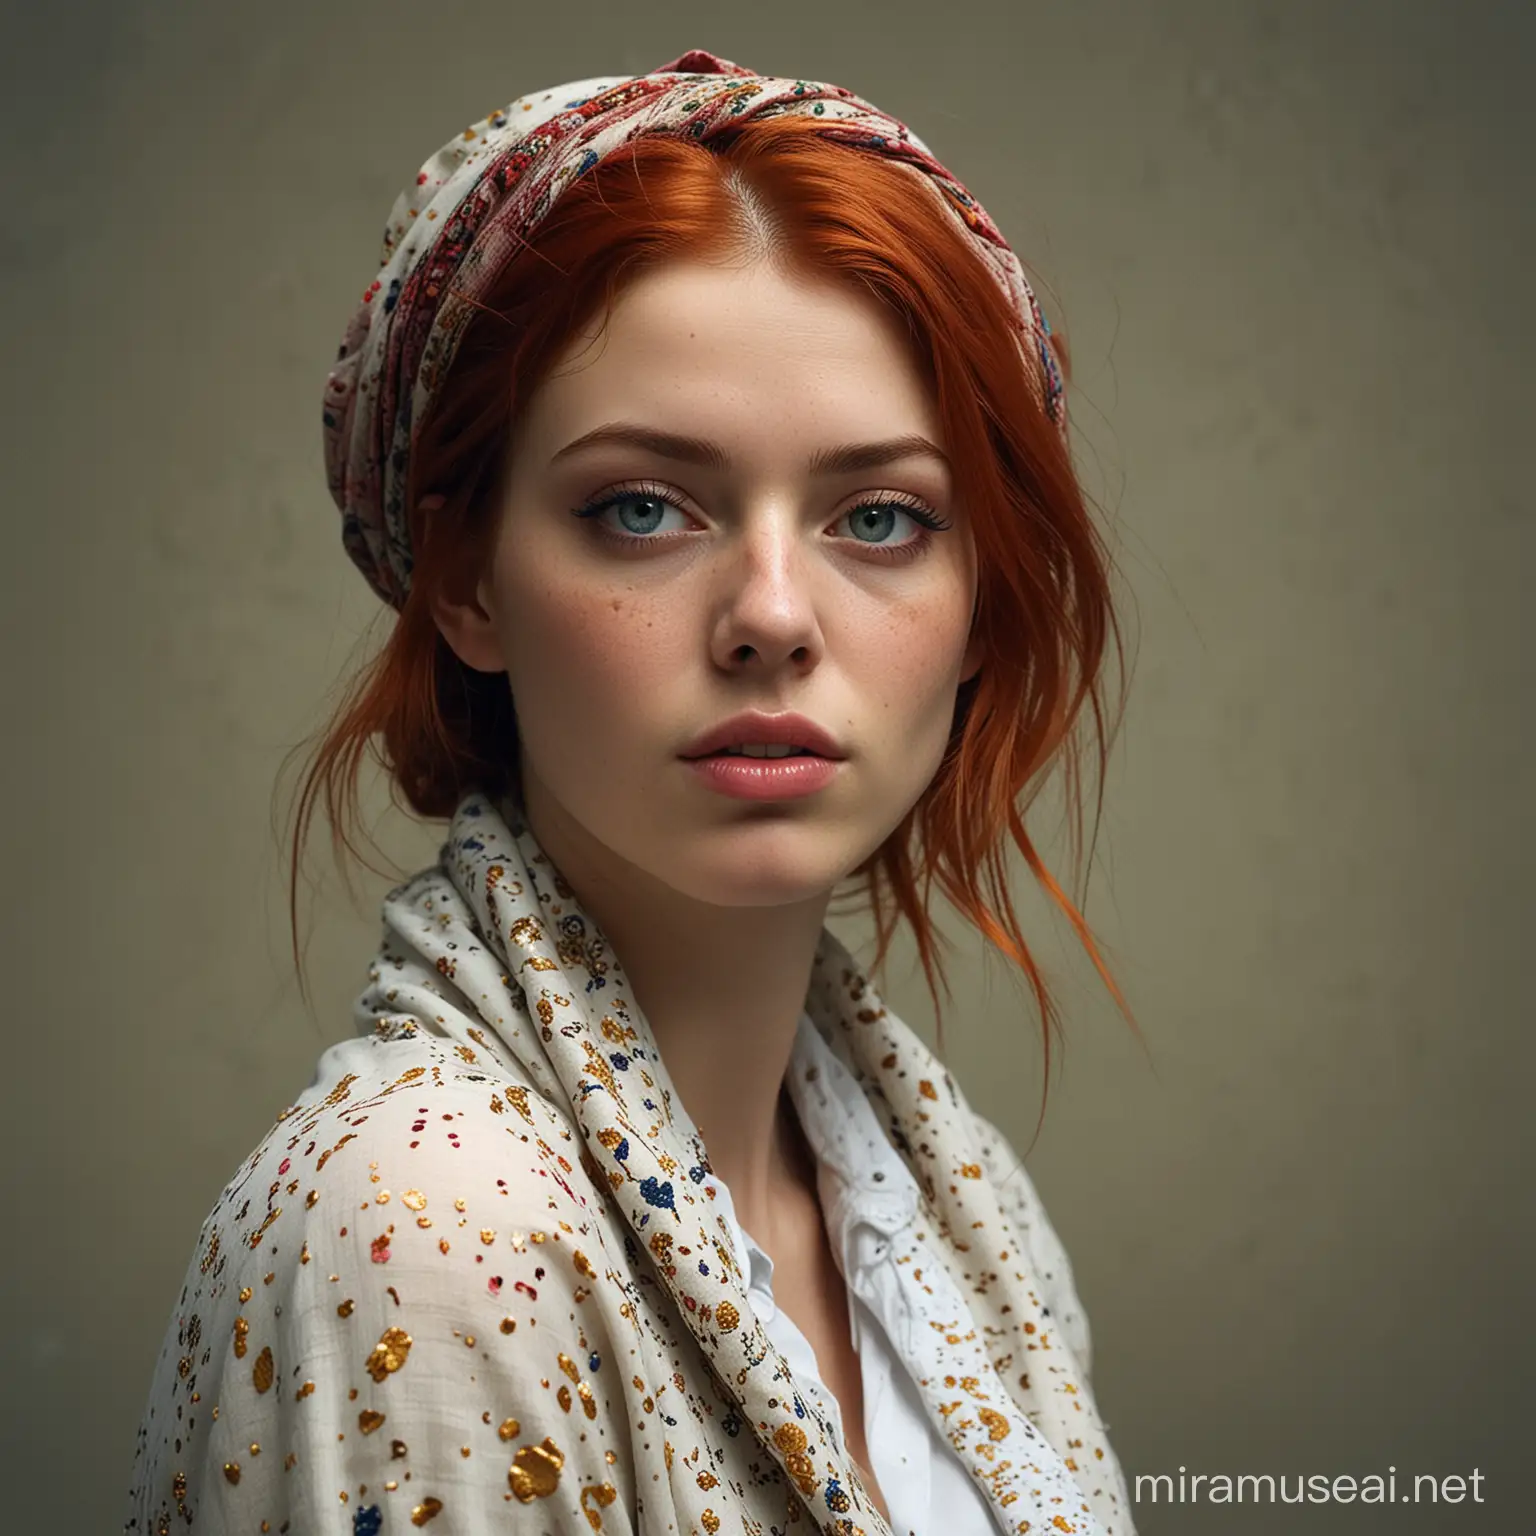 Glamorous Woman in Modern Linen Fashion Studio Portrait